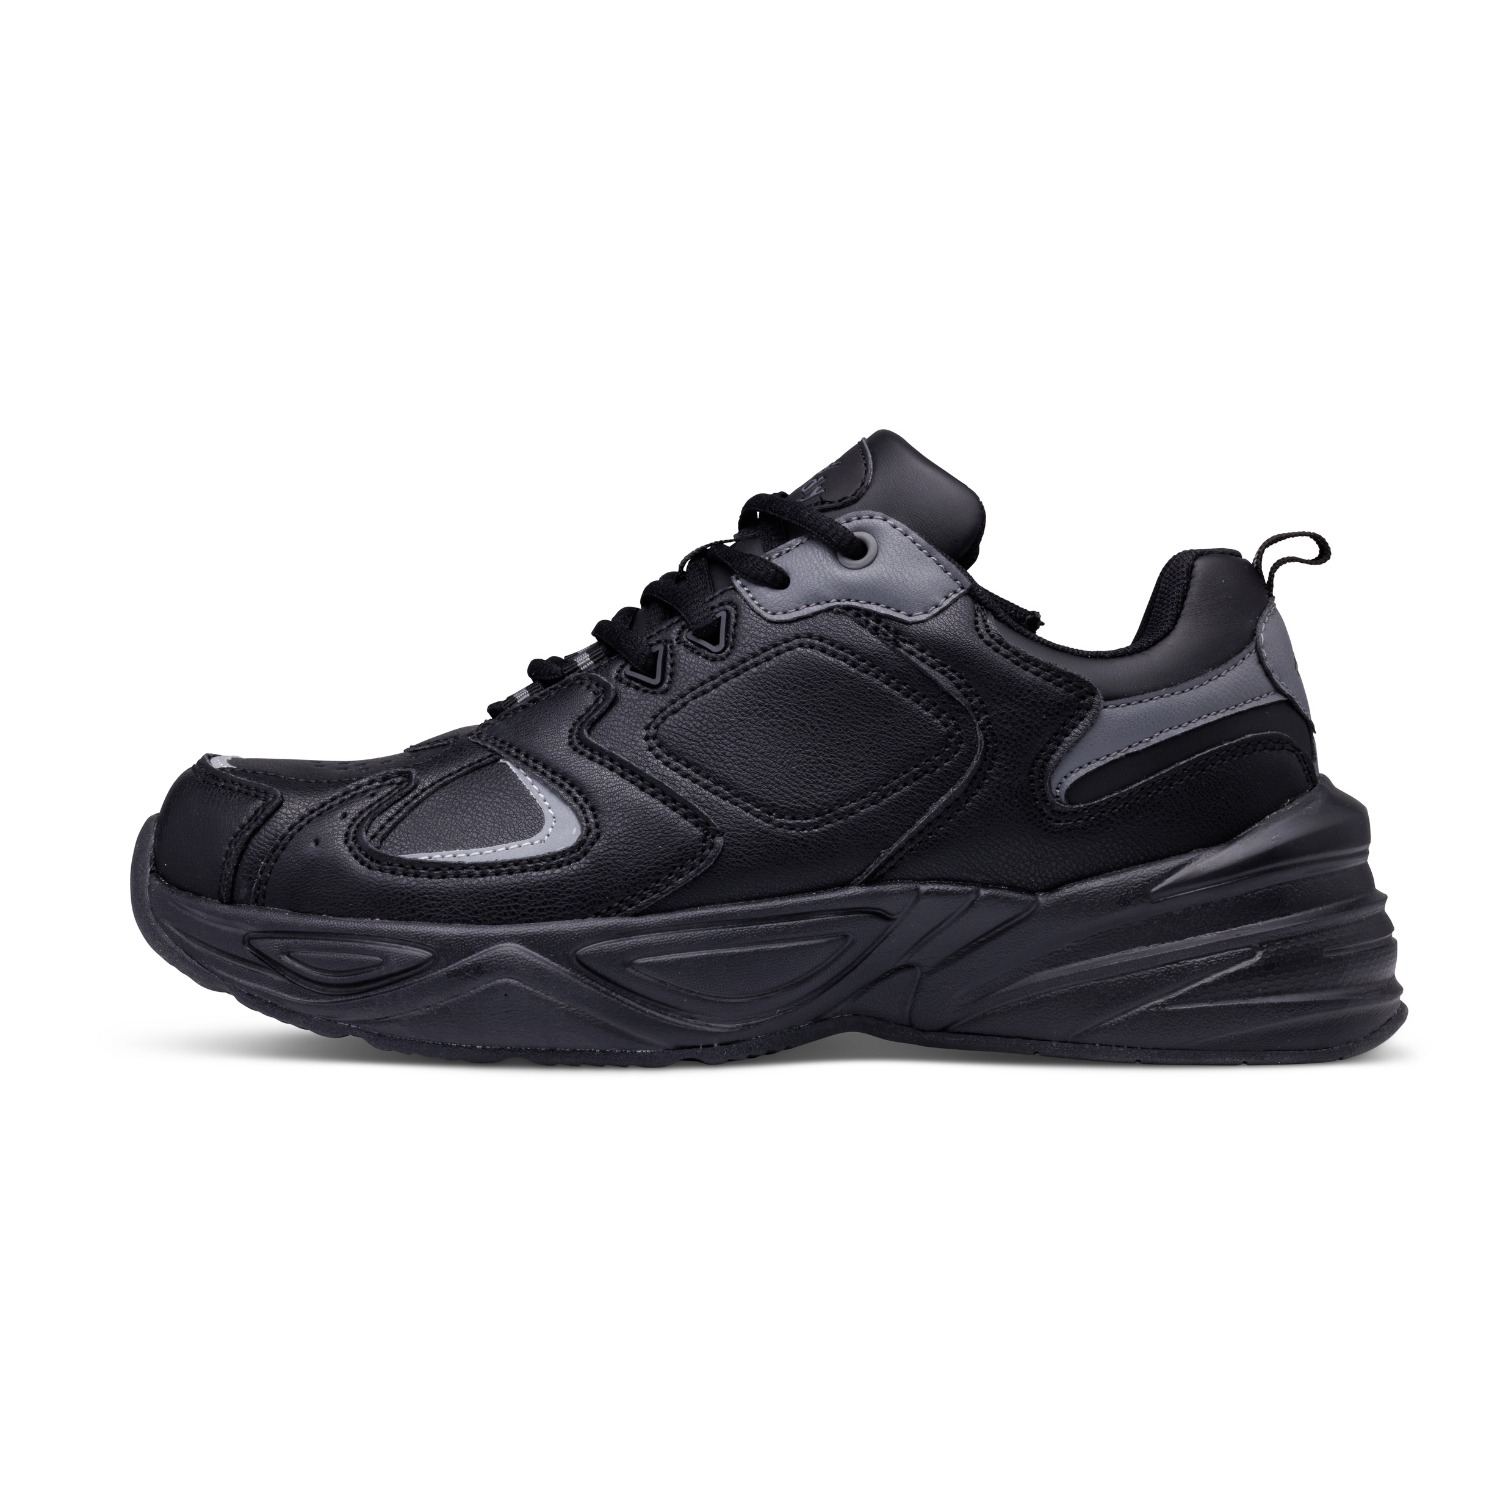 Tenease Black Men's Shoe - Friendly Shoes - The Shoe for All Abilities